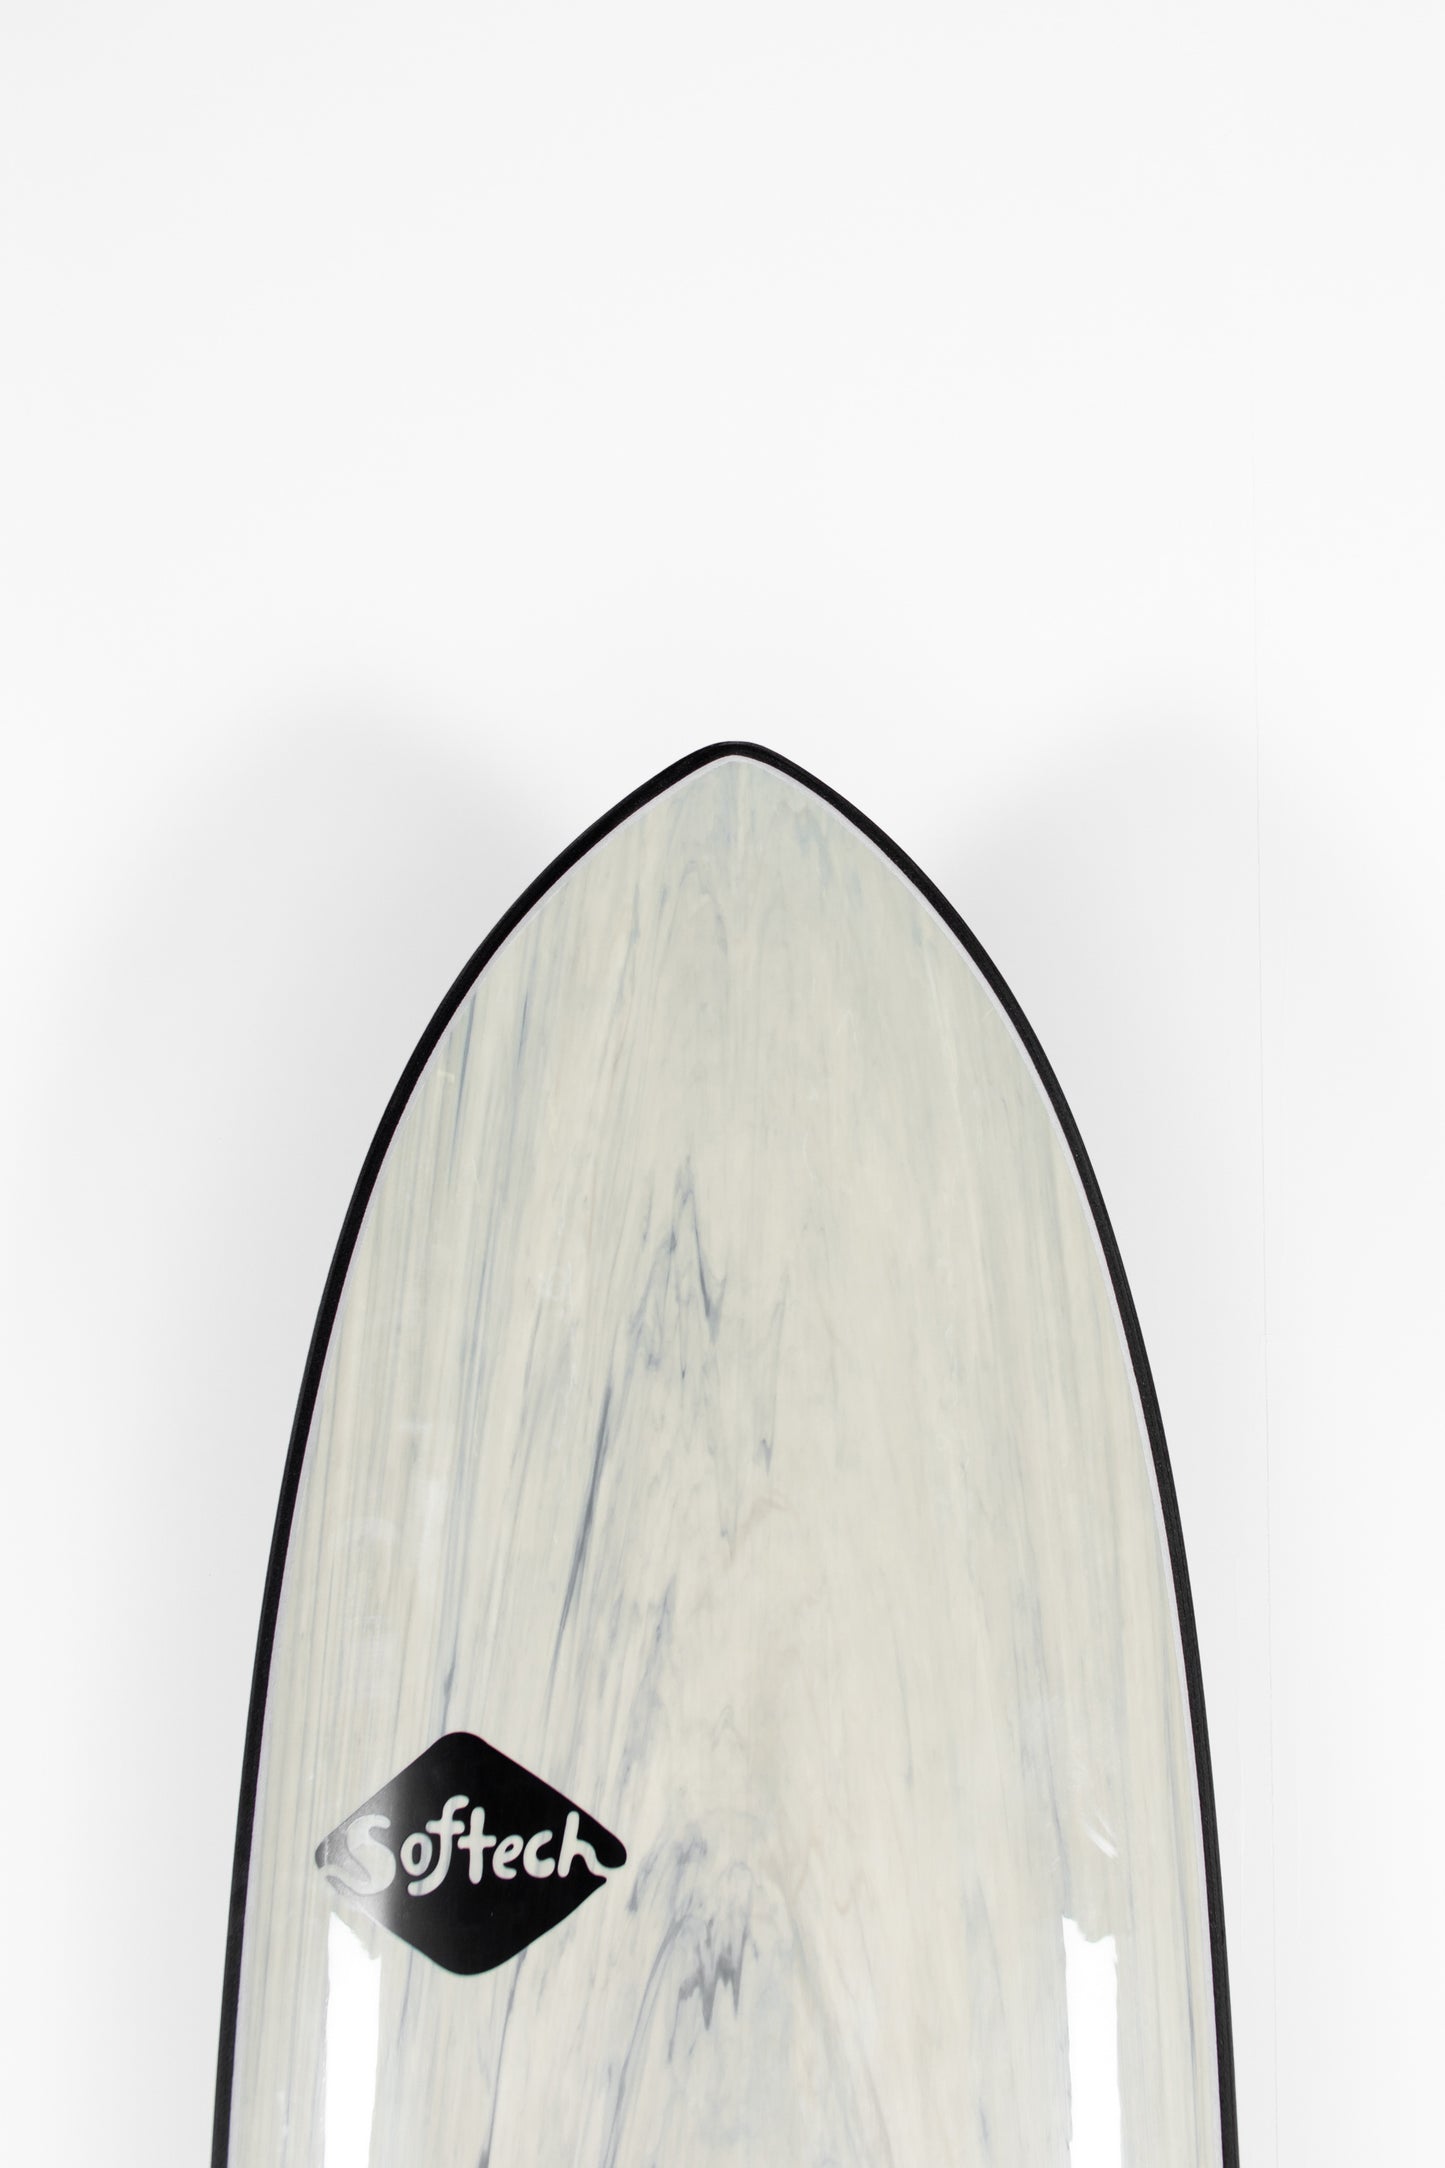 
                  
                    Pukas Surf Shop - SOFTECH - FLASH ERIC GEISELMAN 6'6"
                  
                